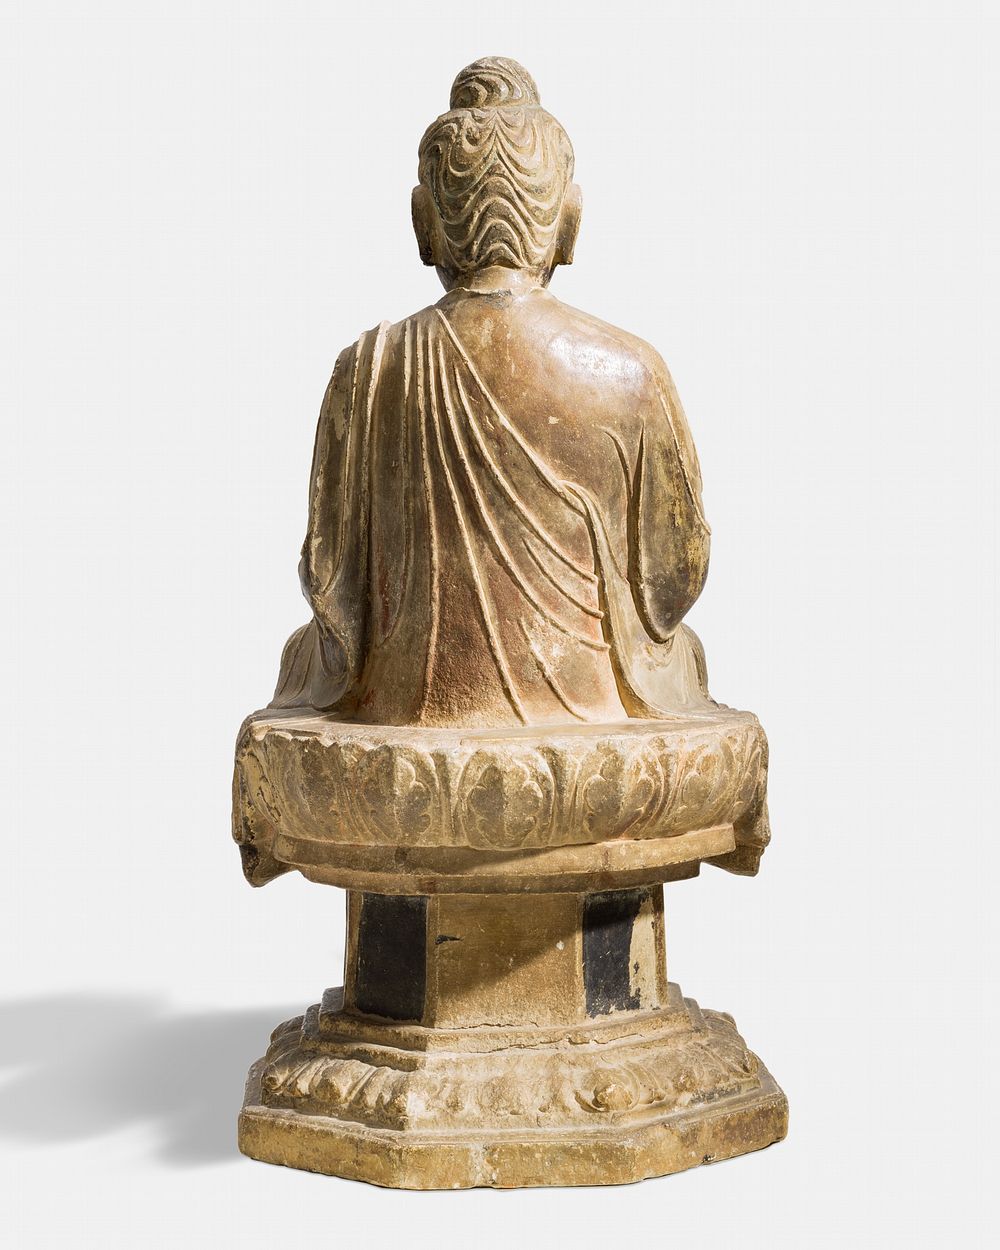 Probably Shakyamuni (Shijiamouni), the Historical Buddha